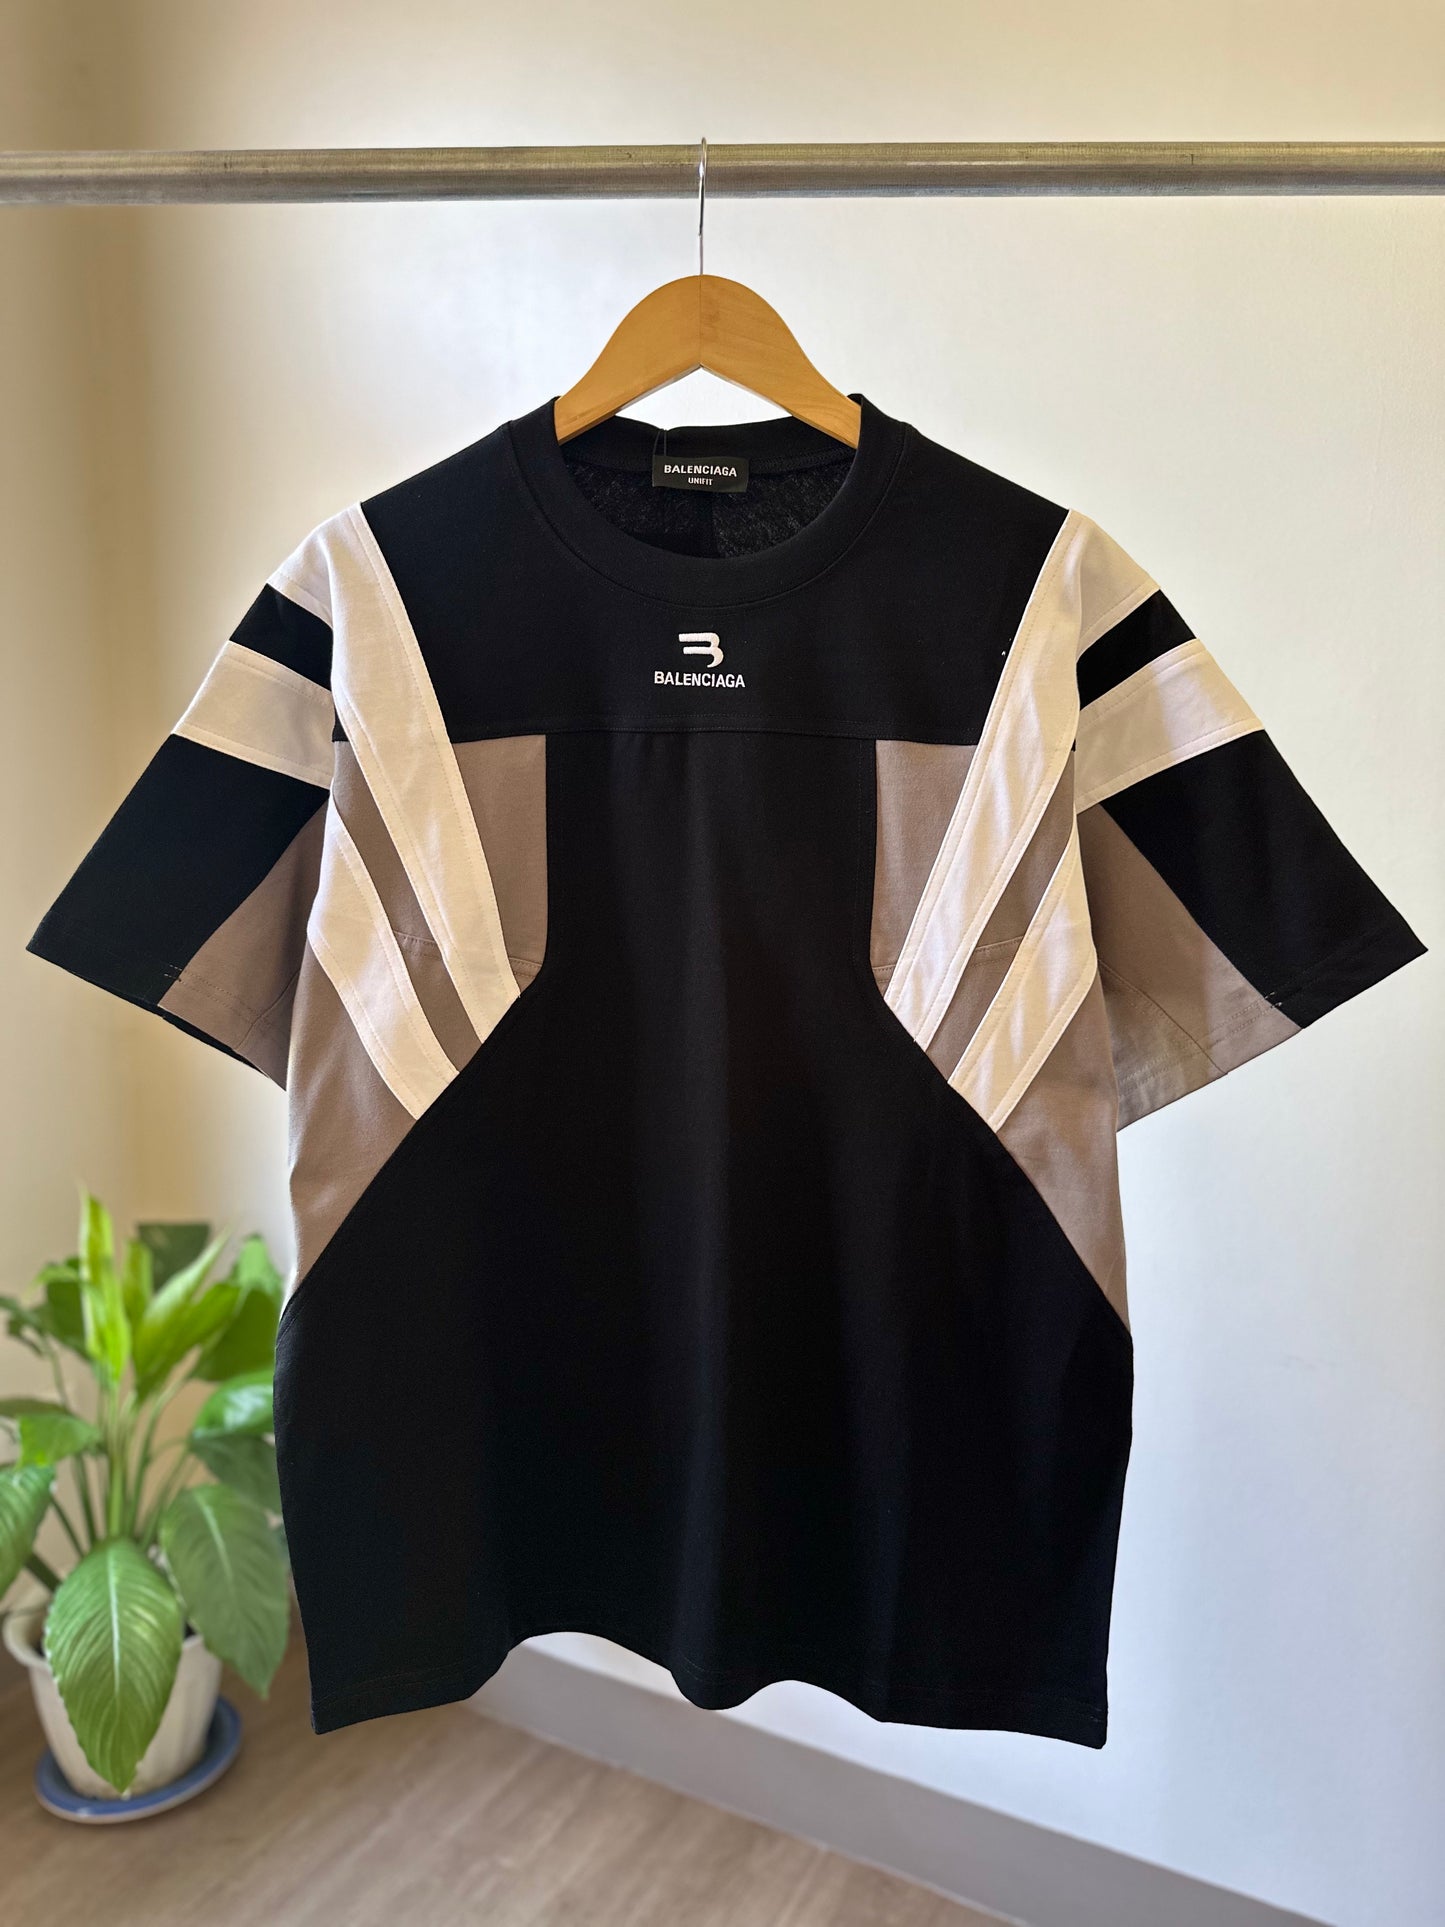 Balenciaga 3 Tone T-Shirt (Black & Gray)